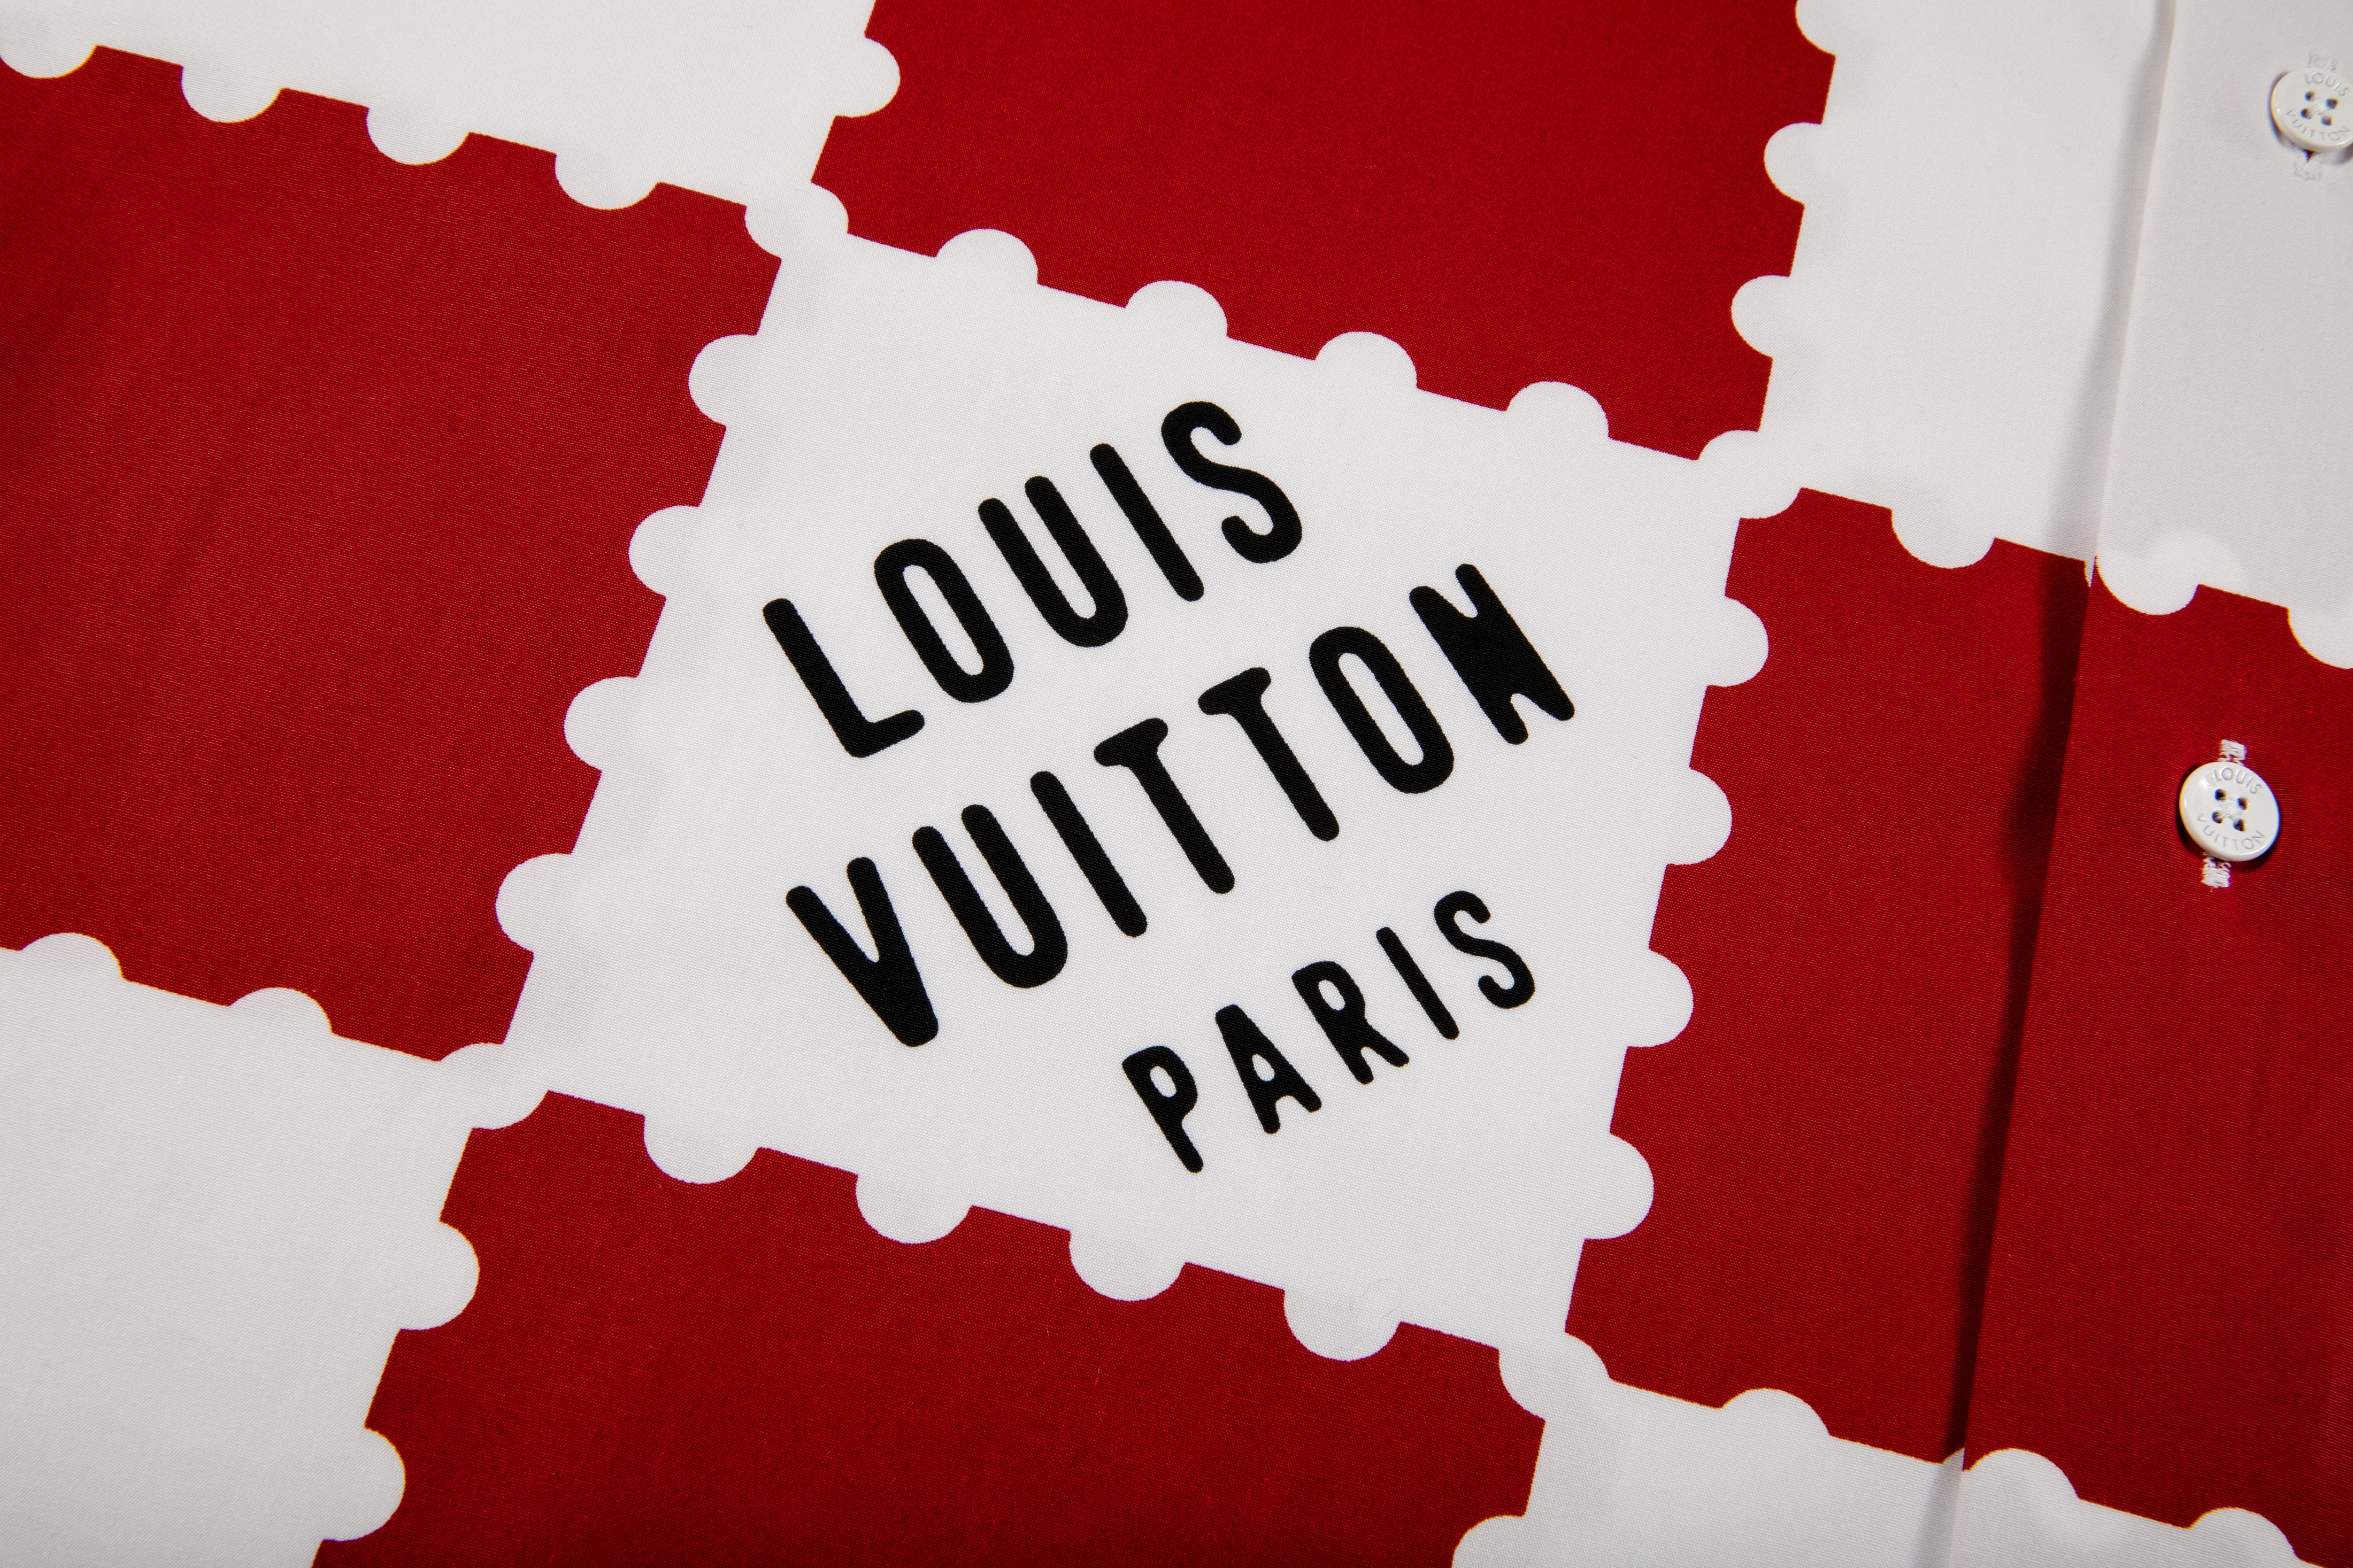 LOUIS VUITTON x NIGO red / white giant damier short sleeve shirt size S